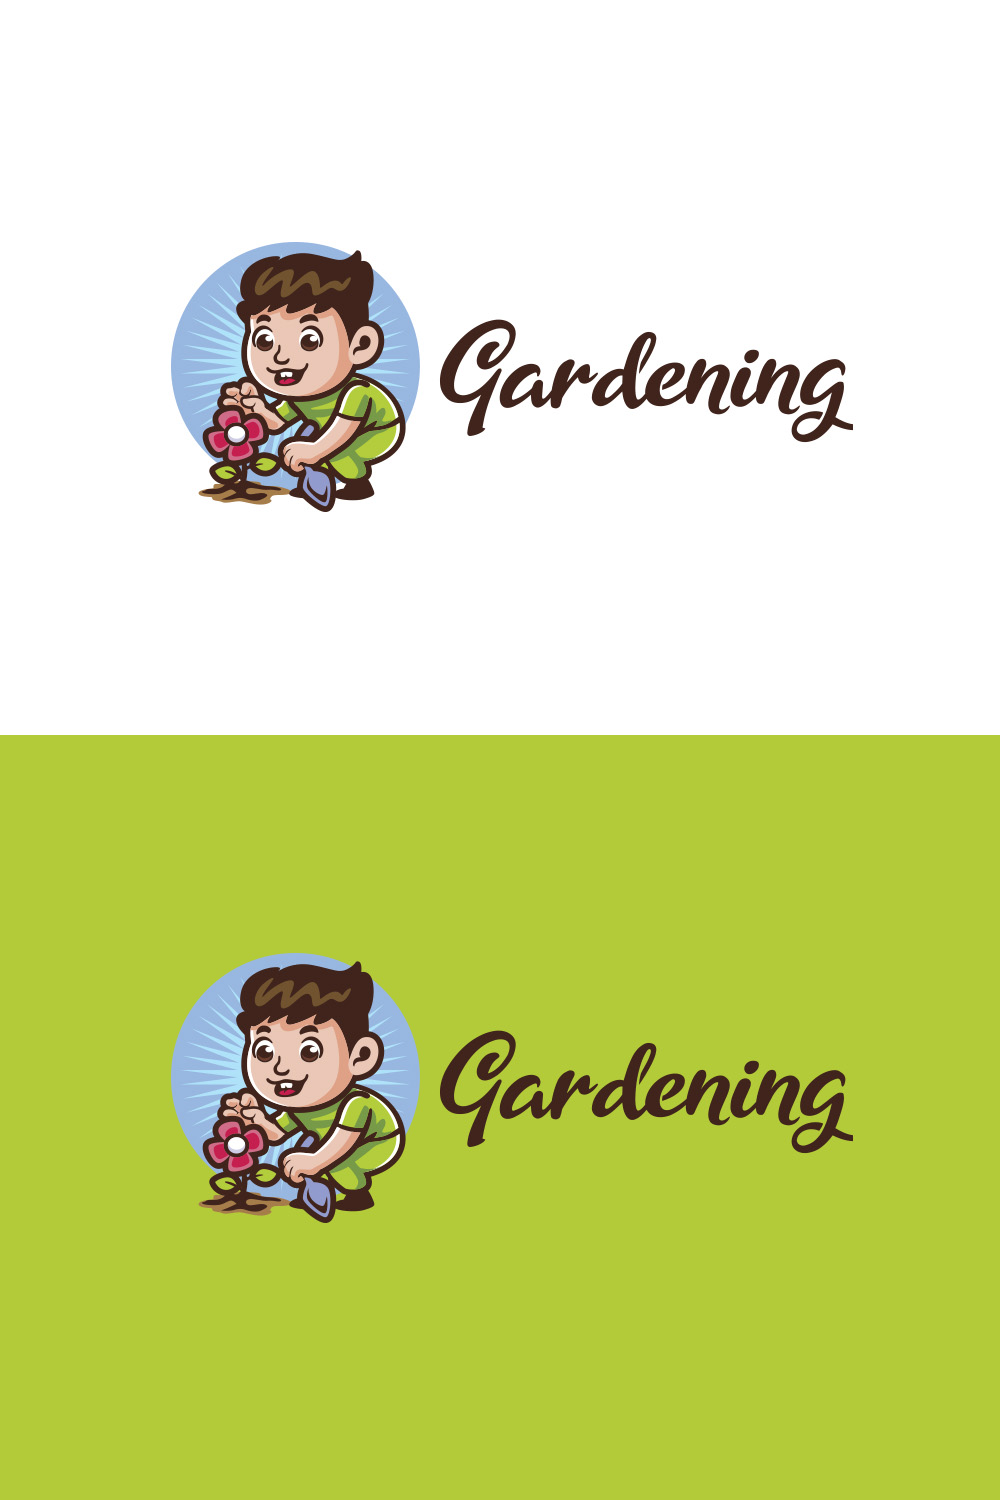 Gardening Boy Character Mascot Logo pinterest preview image.